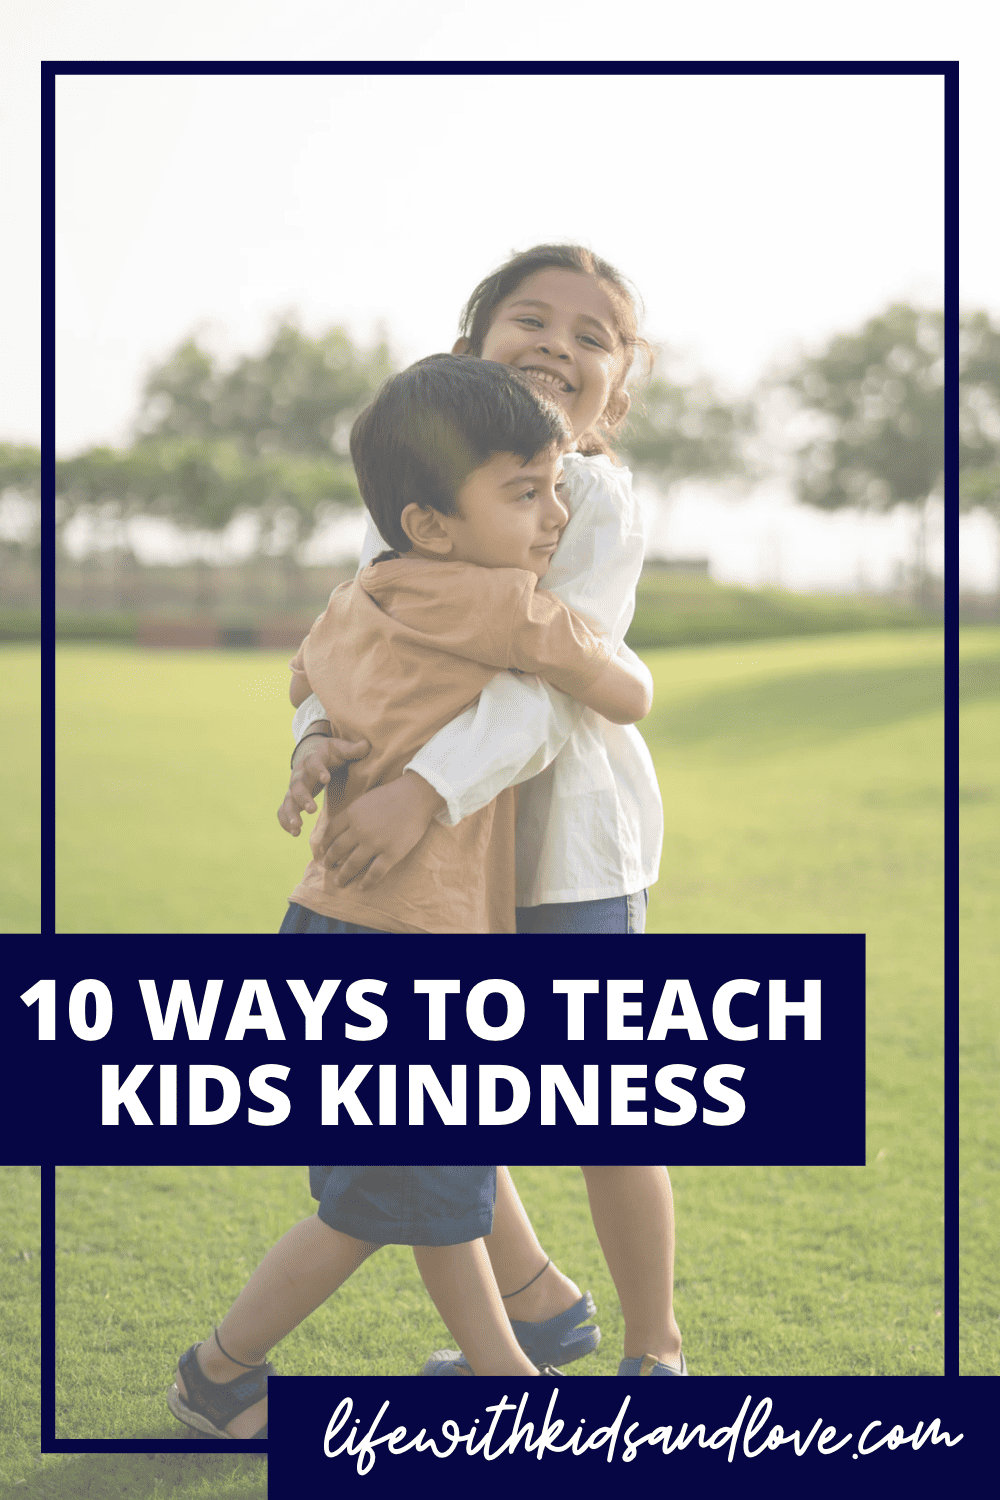 10 Ways to Teach Kids Kindness